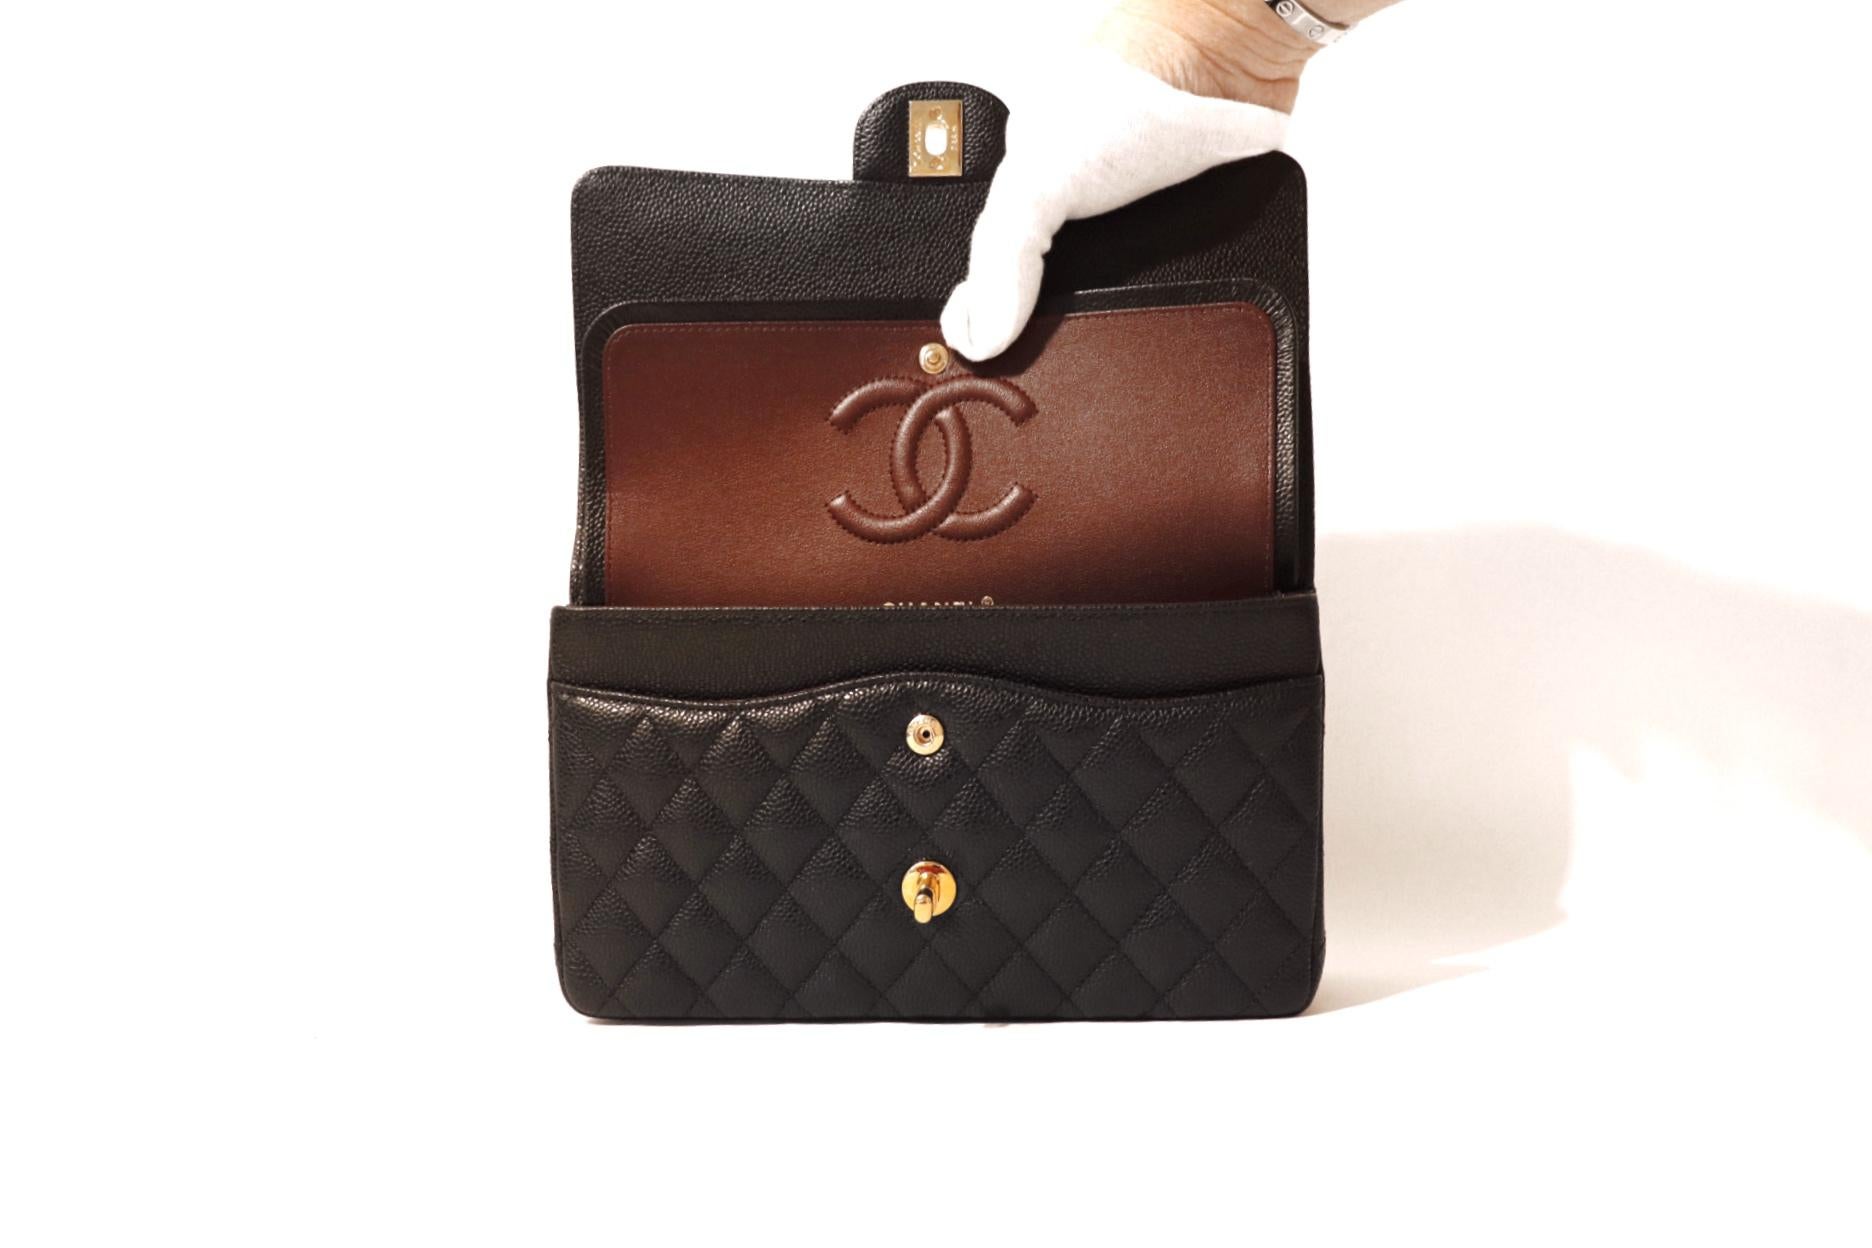 Chanel Black Caviar Leather Medium Classic Bag 3